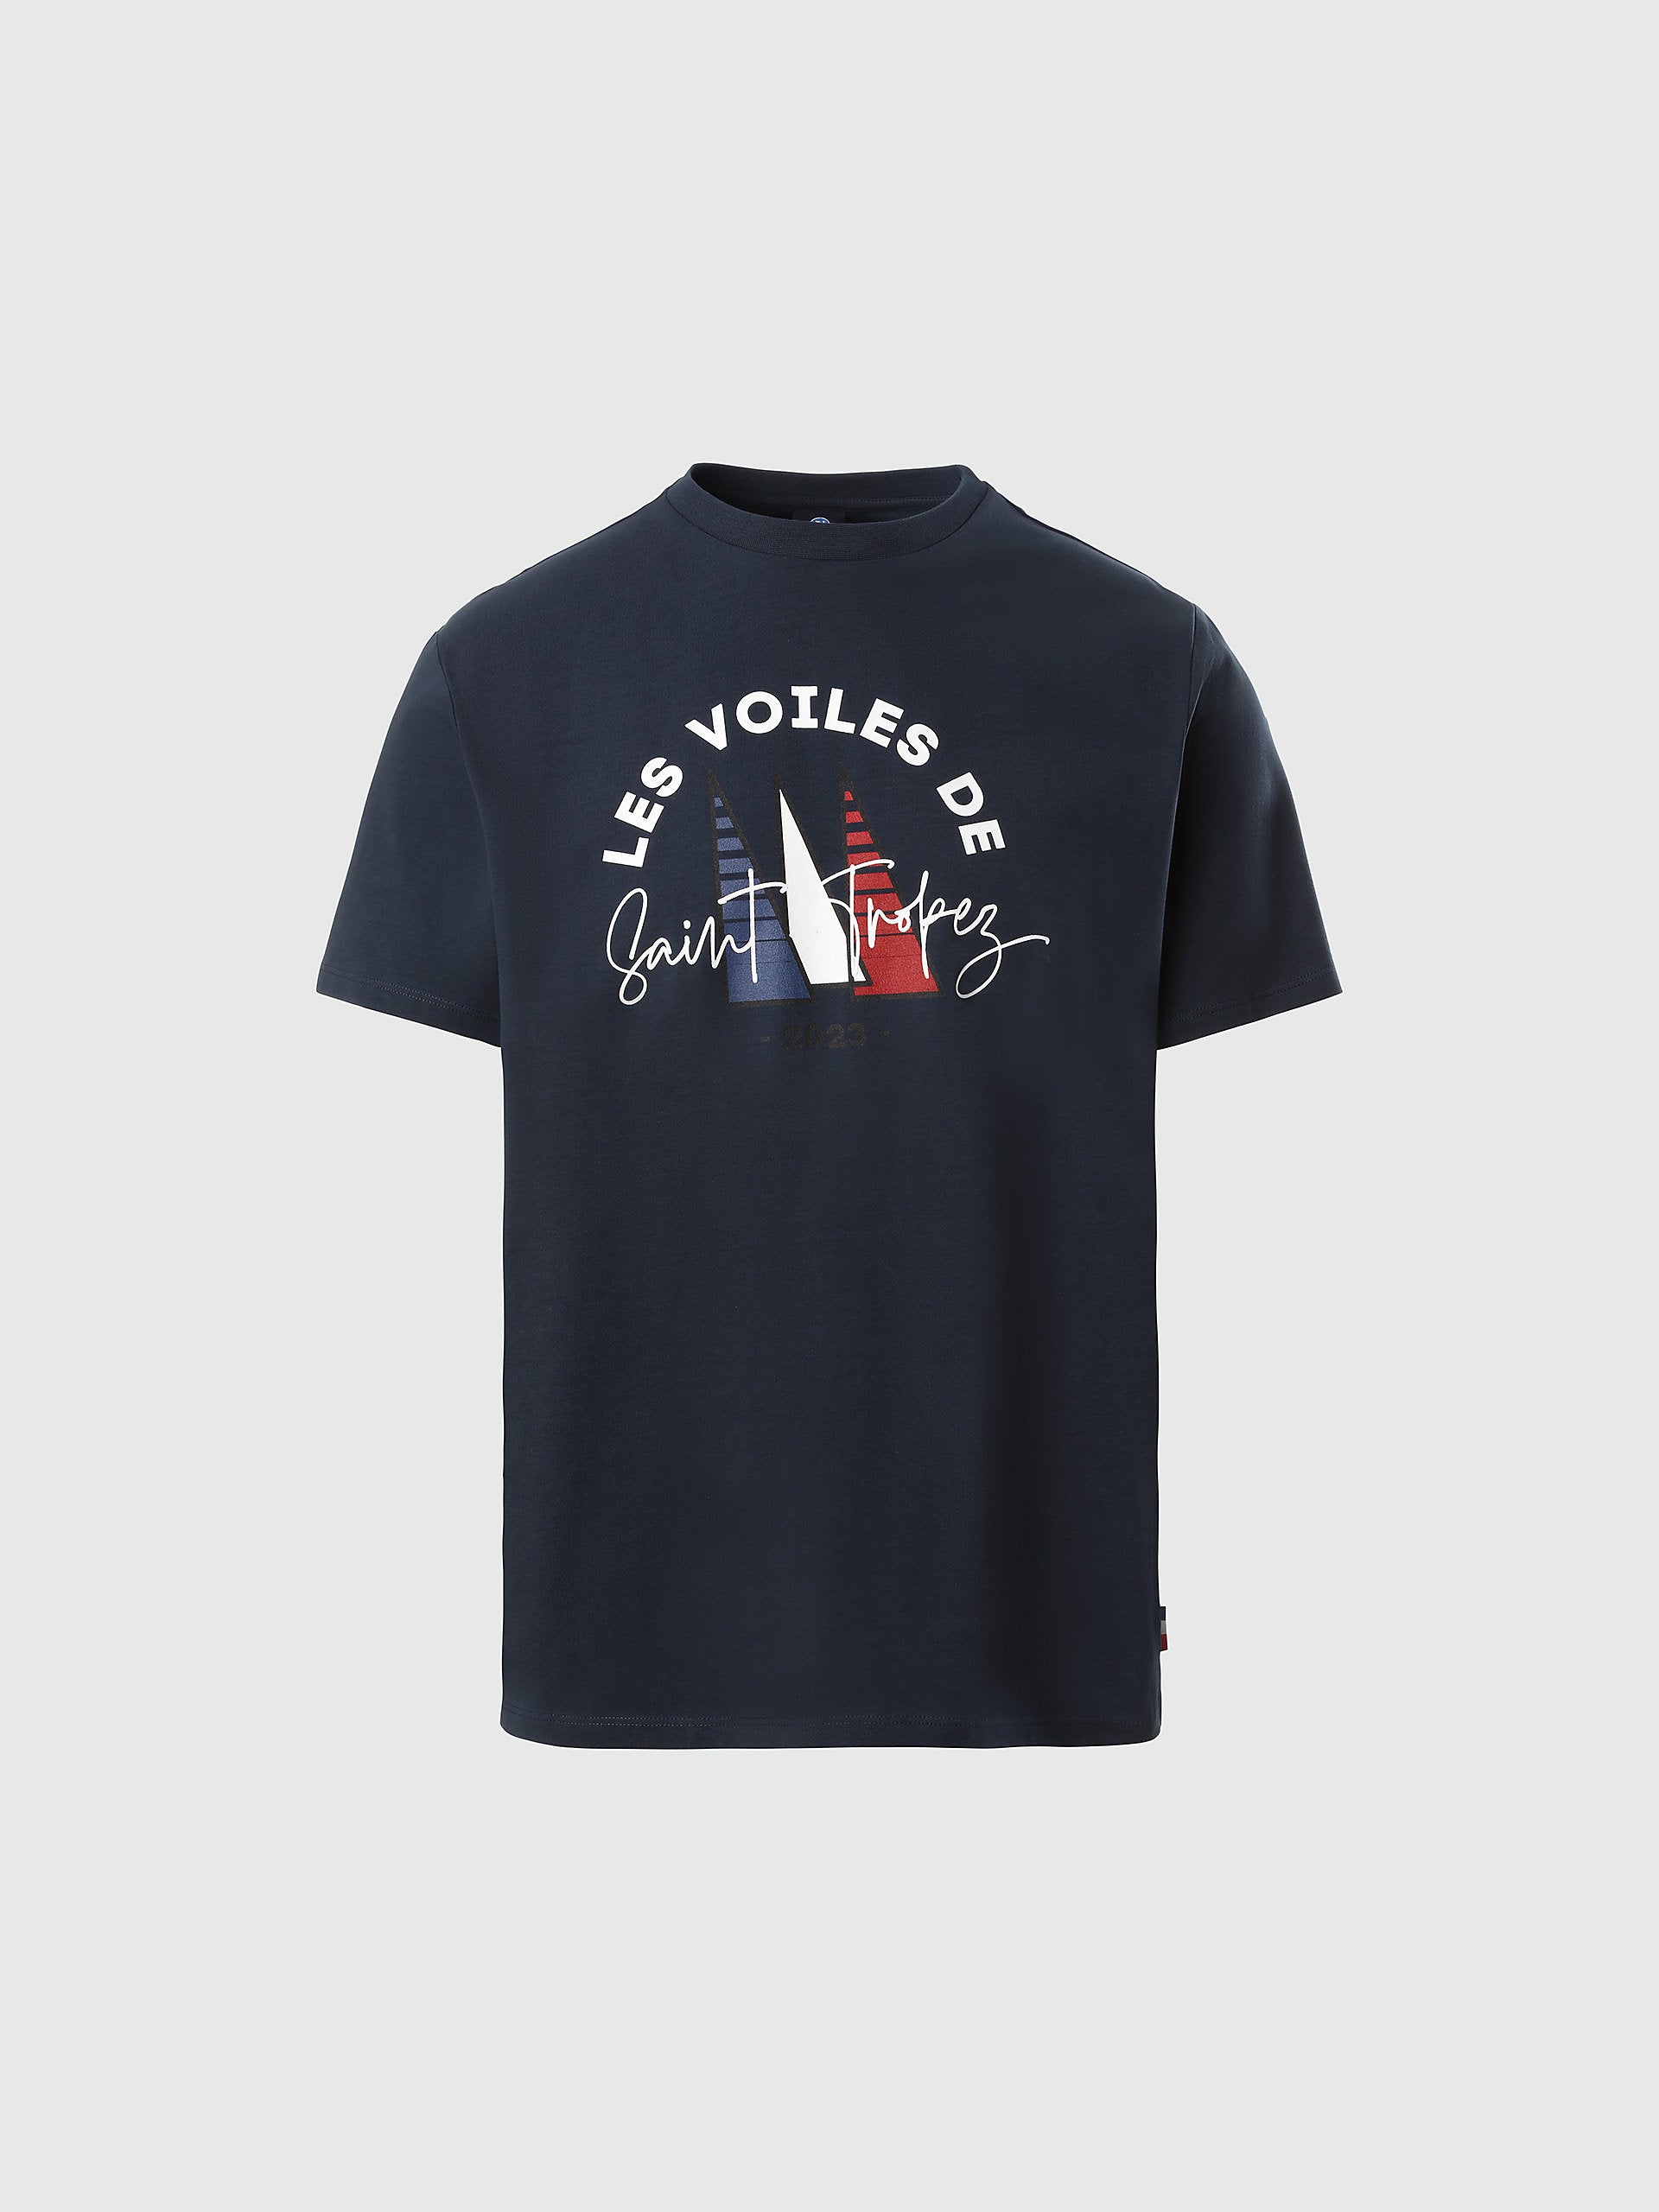 North Sails - T-shirt Saint-TropezNorth SailsNavy blueM